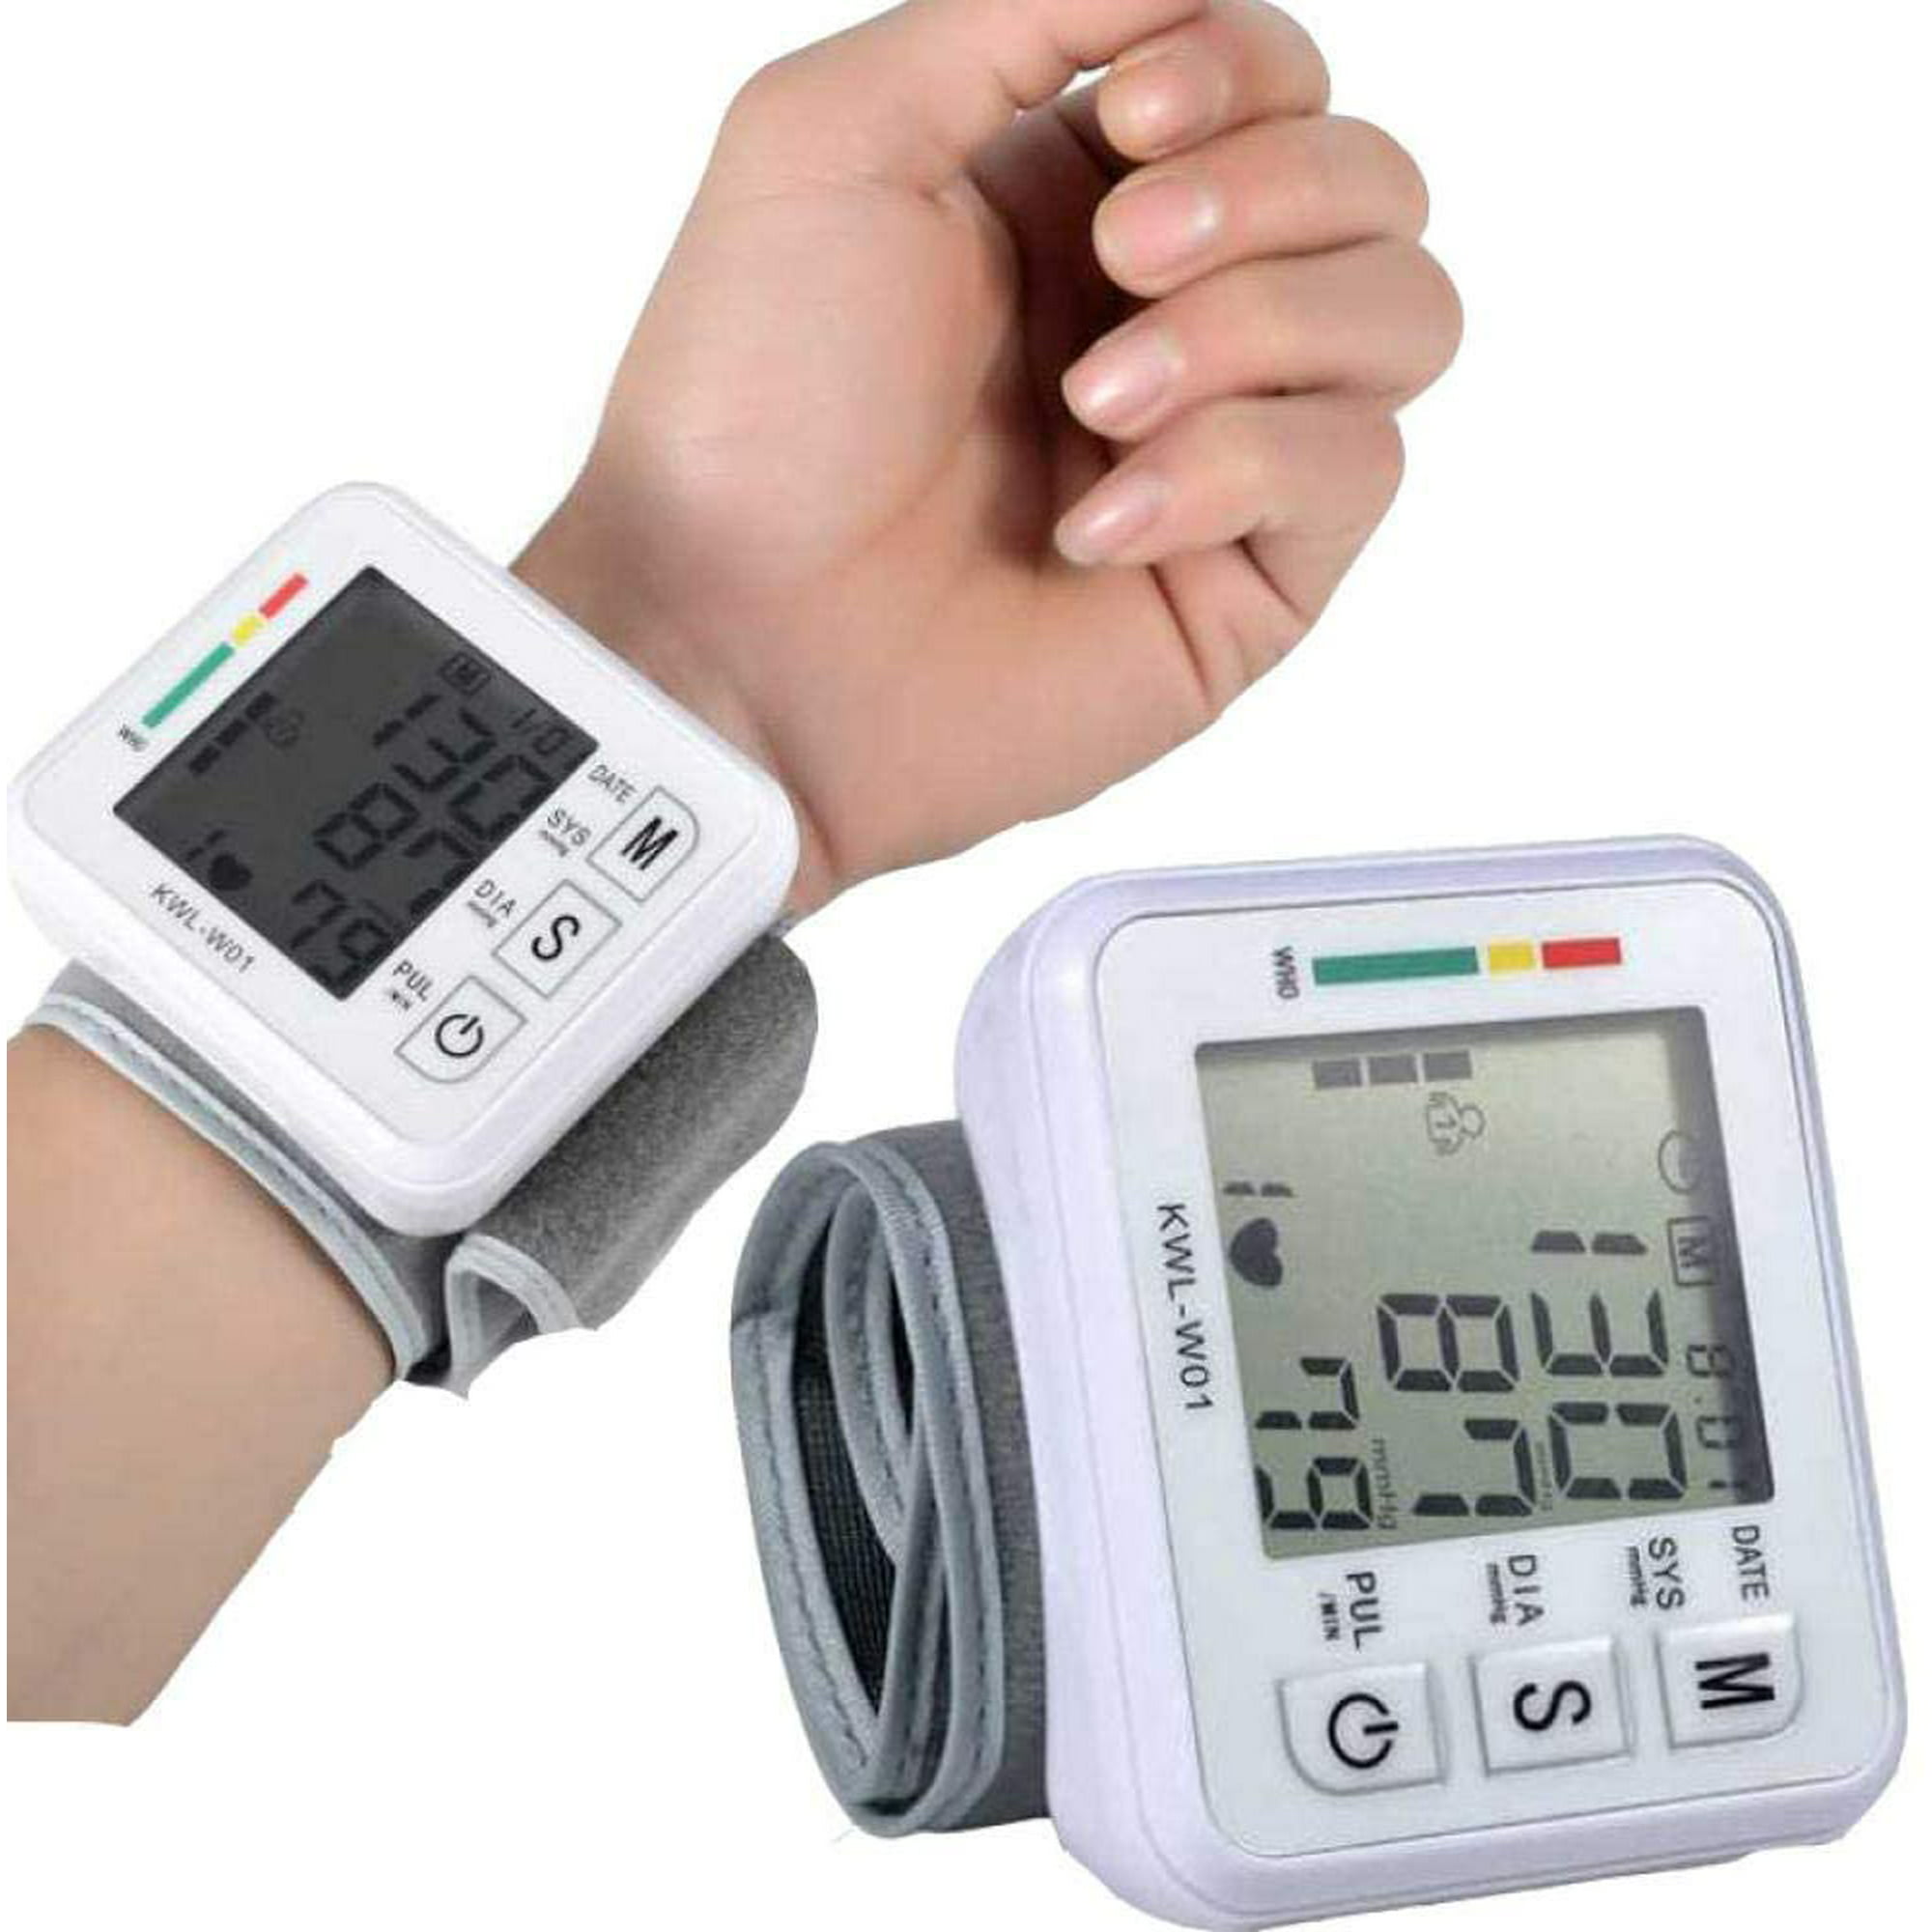 China Customized Automatic Digital Wrist Blood Pressure Monitor Suppliers,  Manufacturers - Factory Direct Wholesale - JZIKI